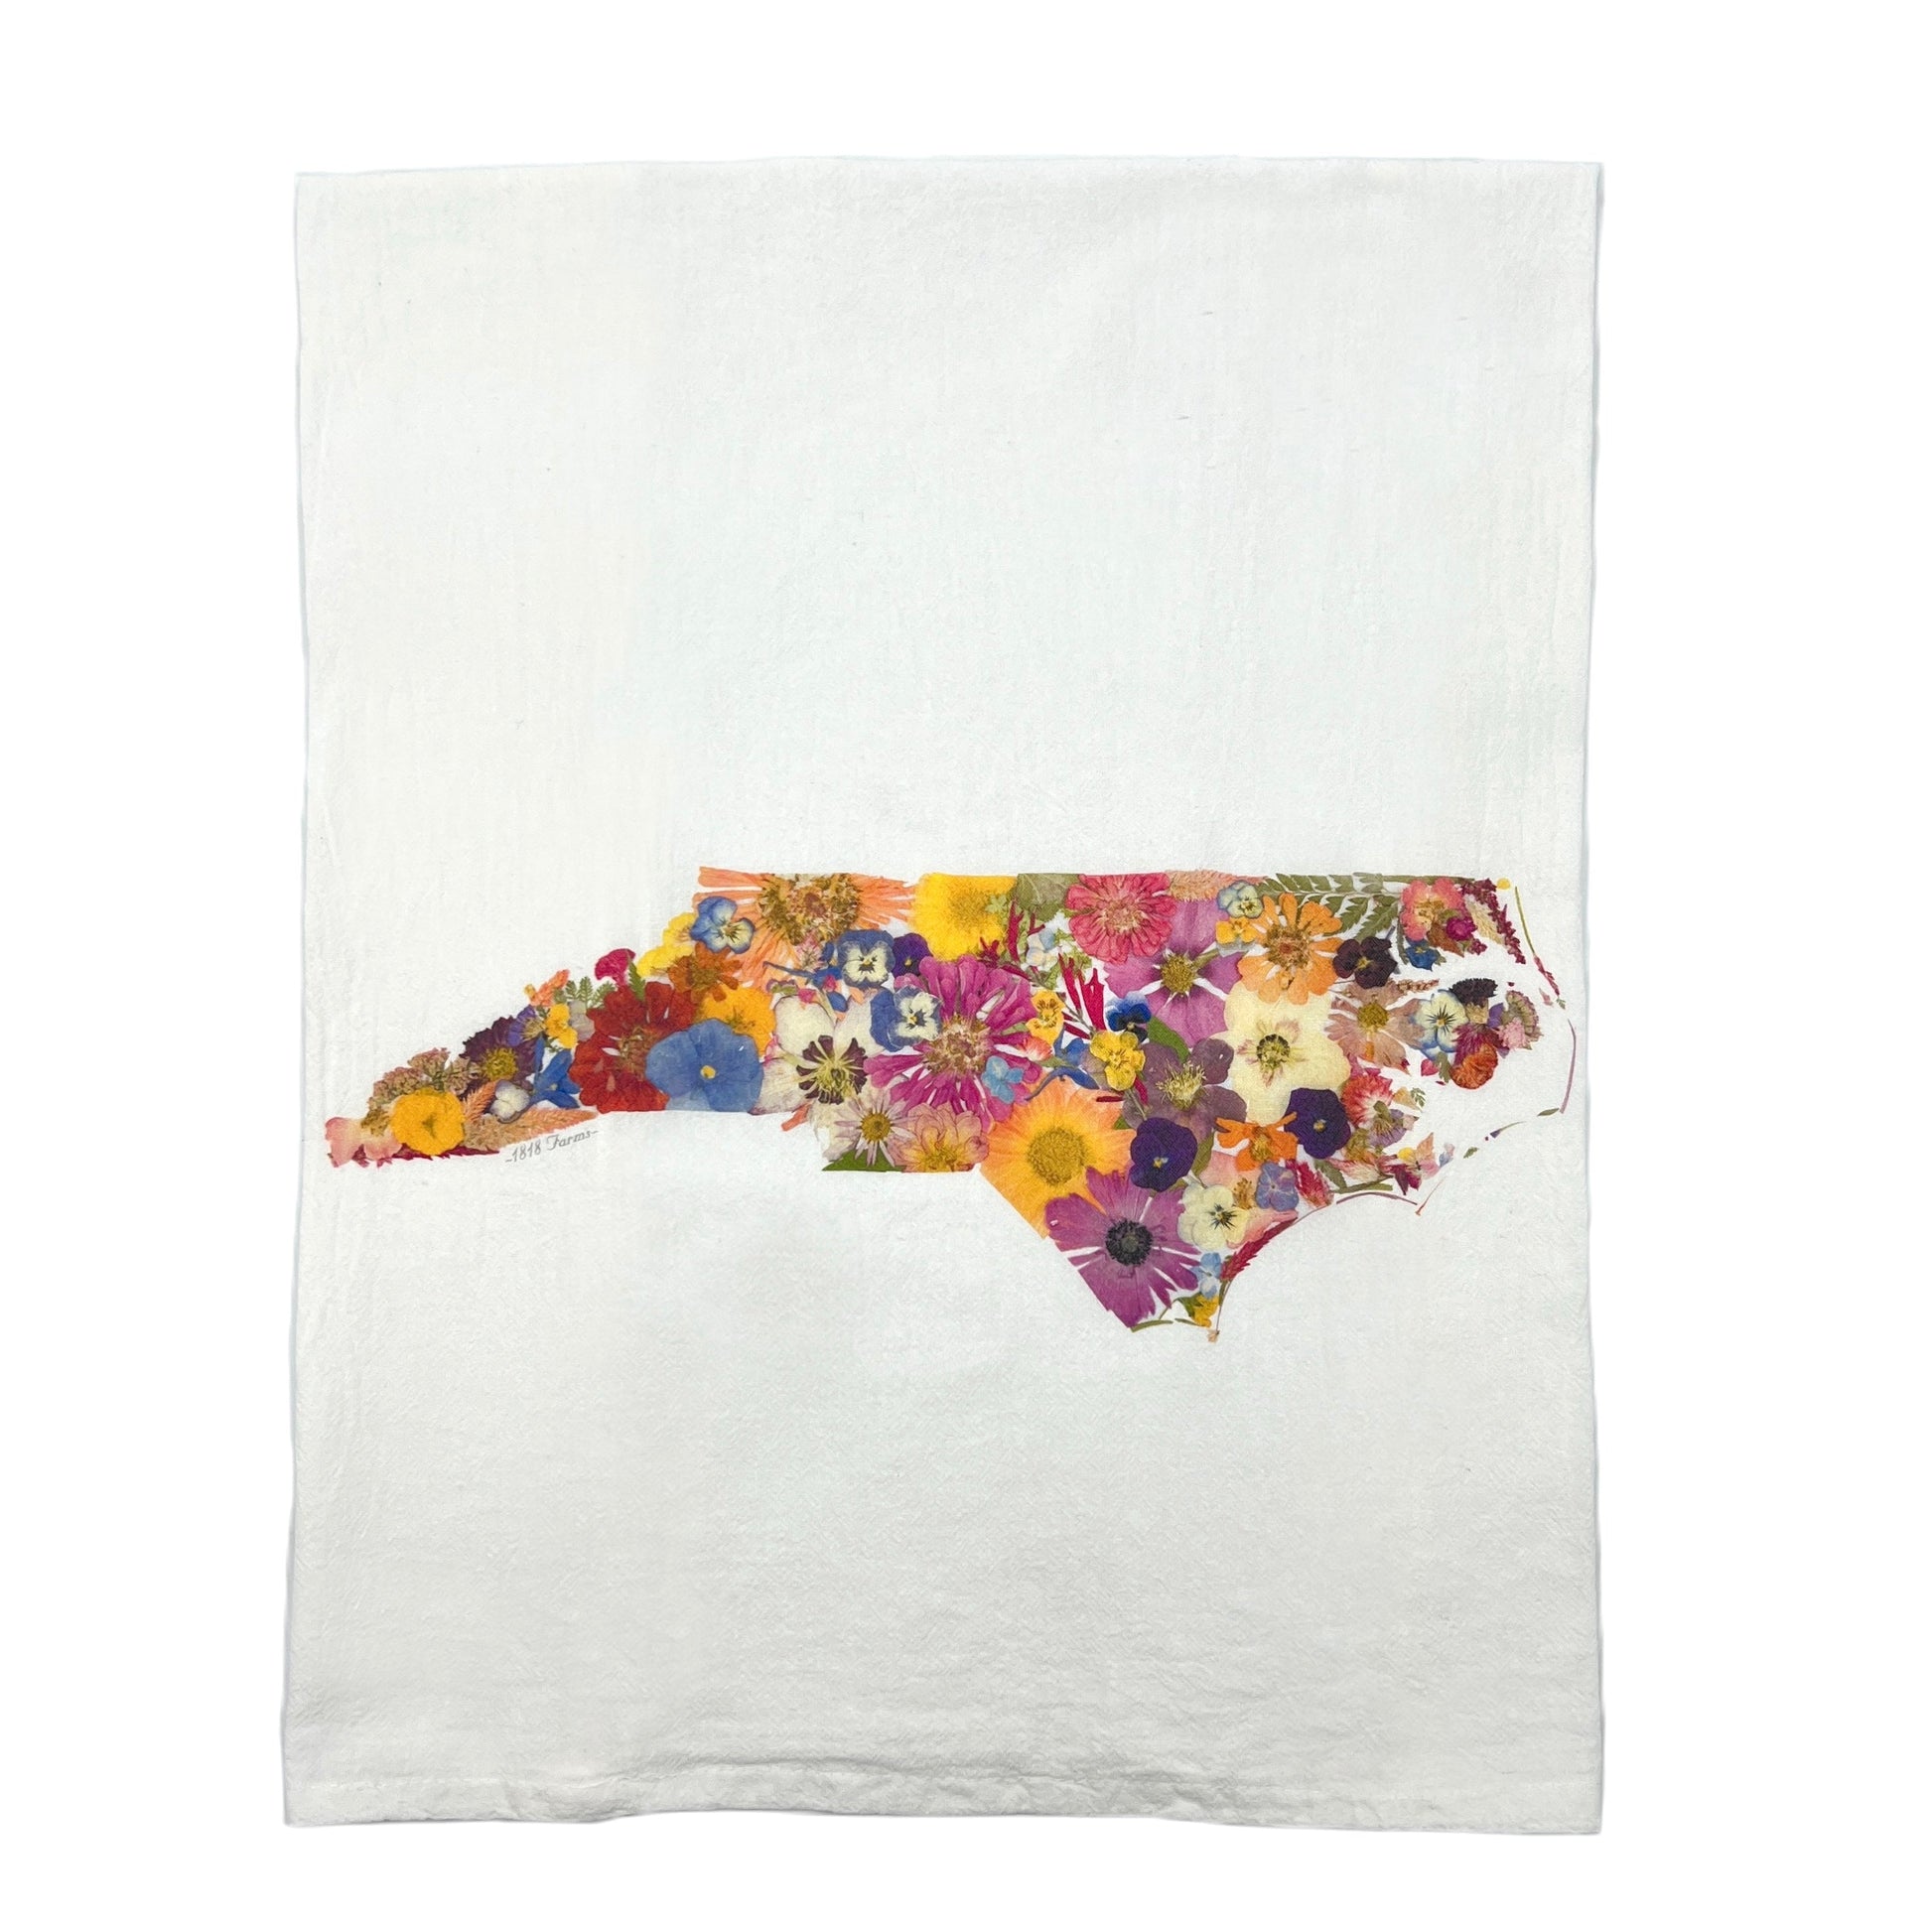 State Themed Flour Sack Towel  - "Where I Bloom" Collection Towel 1818 Farms North Carolina  